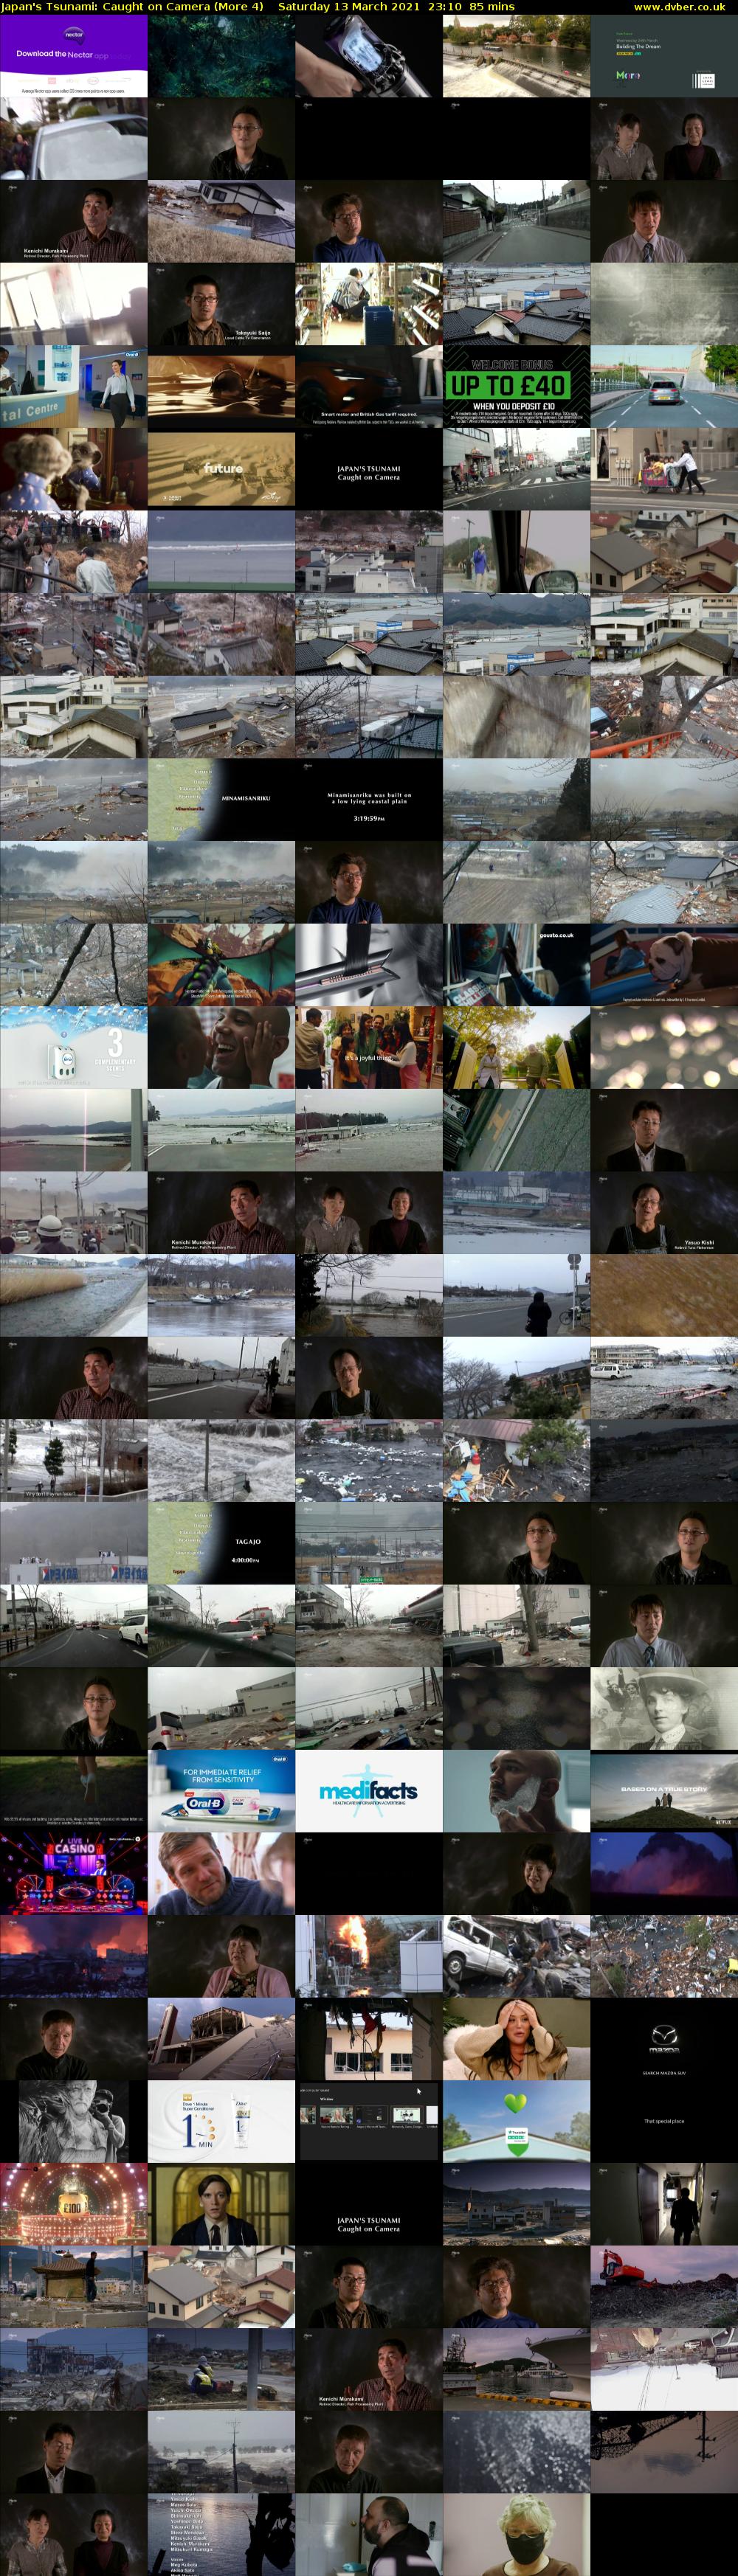 Japan's Tsunami: Caught on Camera (More 4) Saturday 13 March 2021 23:10 - 00:35